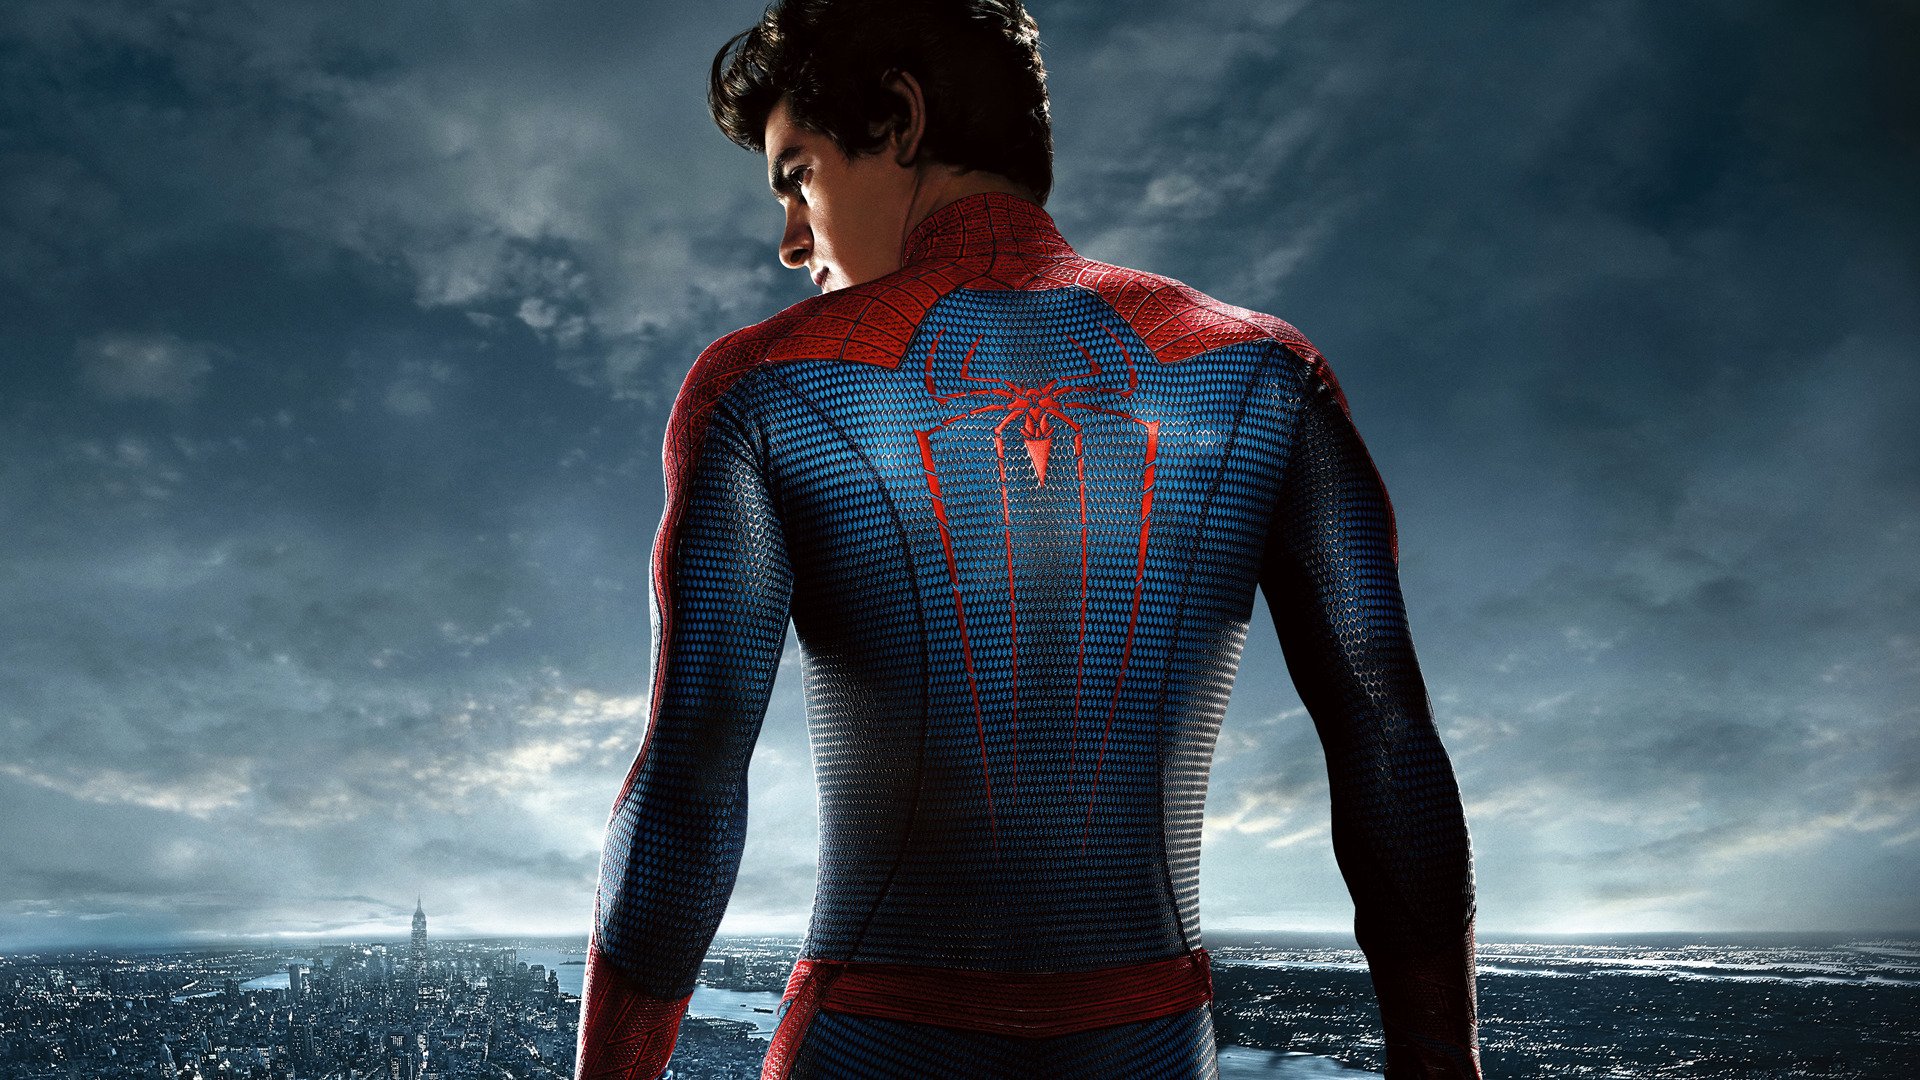 the amazing spider man full movie english